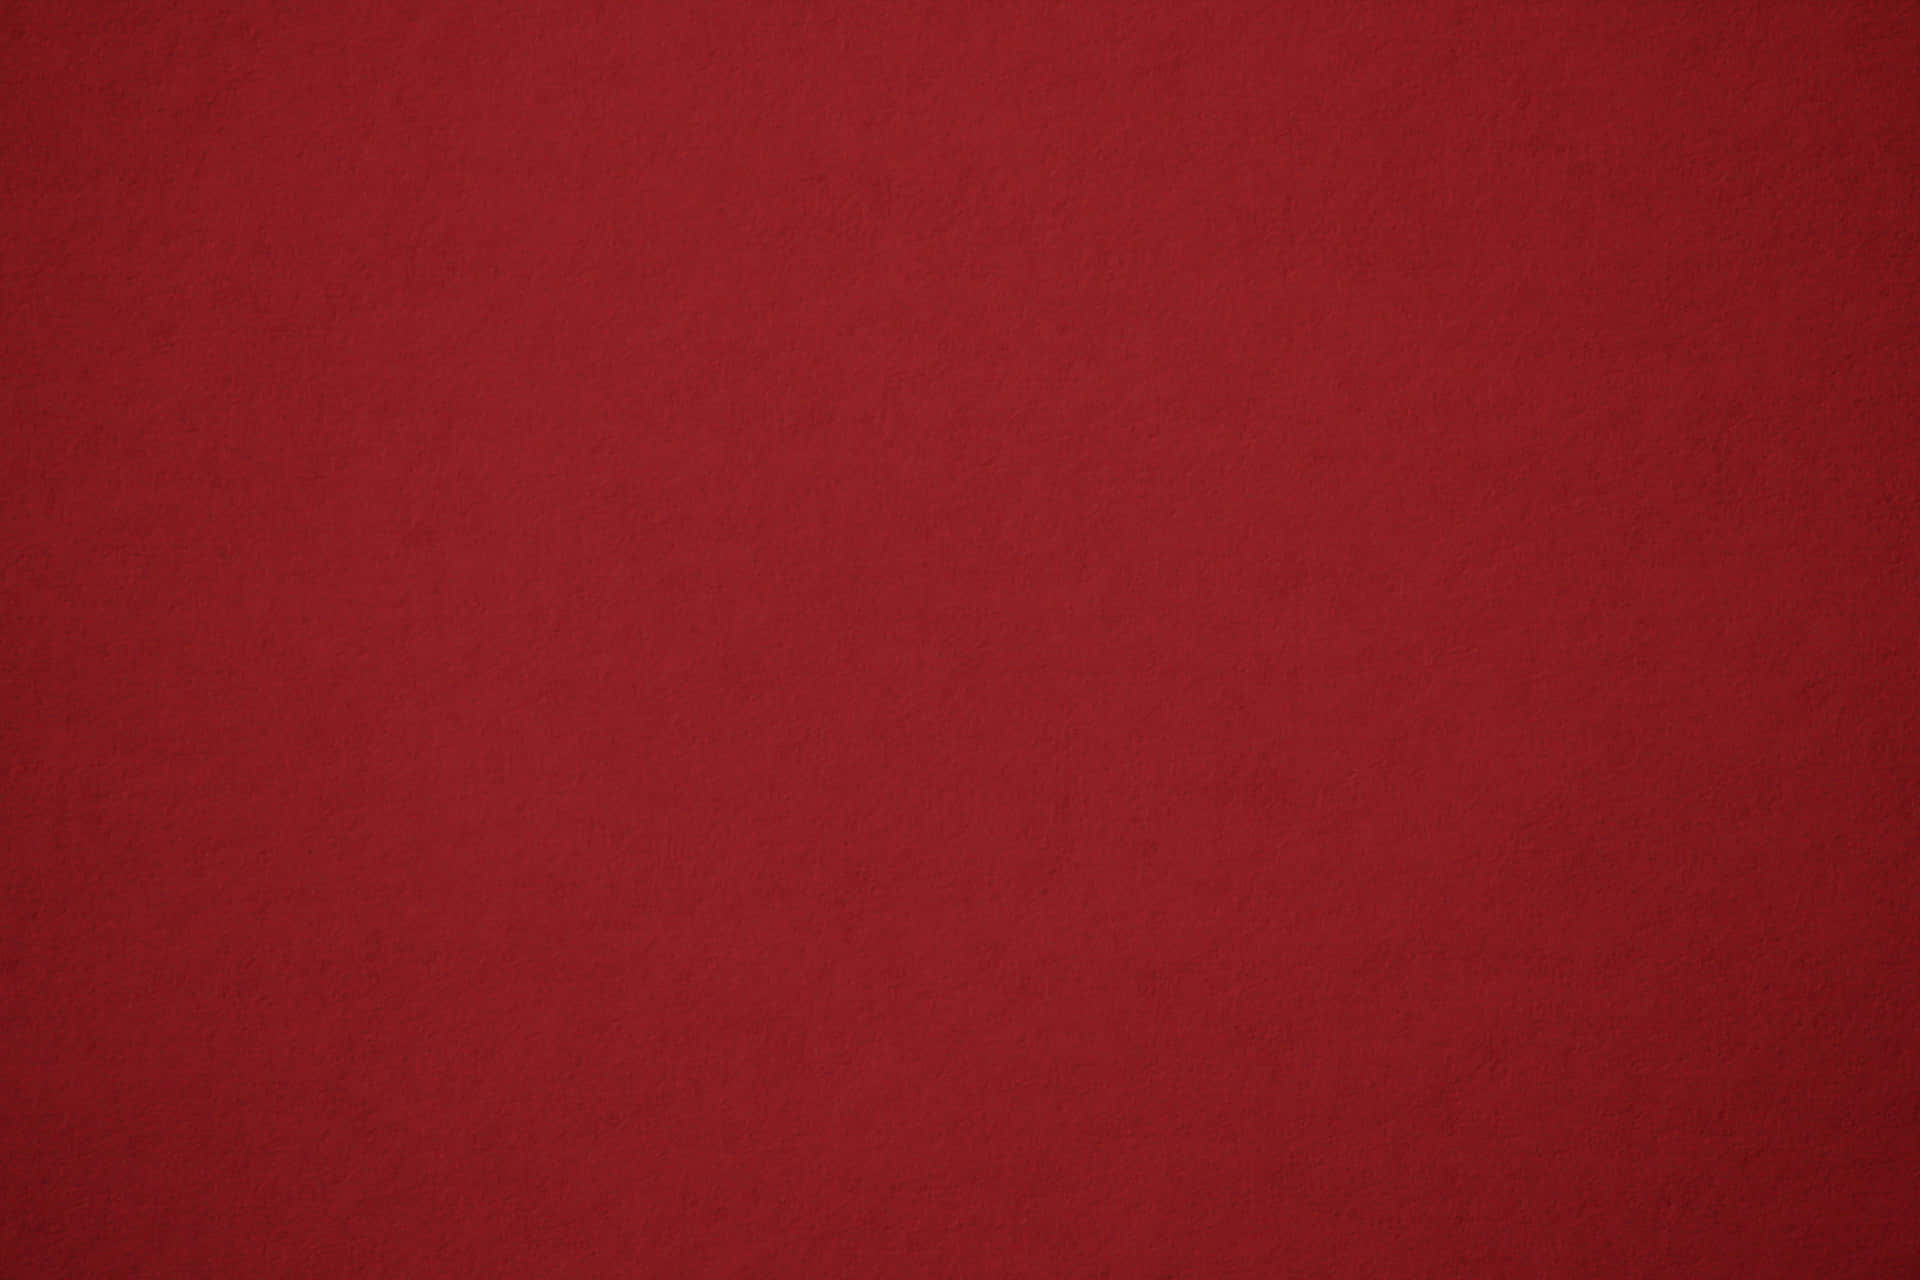 Imagende Fondo Rojo Liso Con Textura Roja